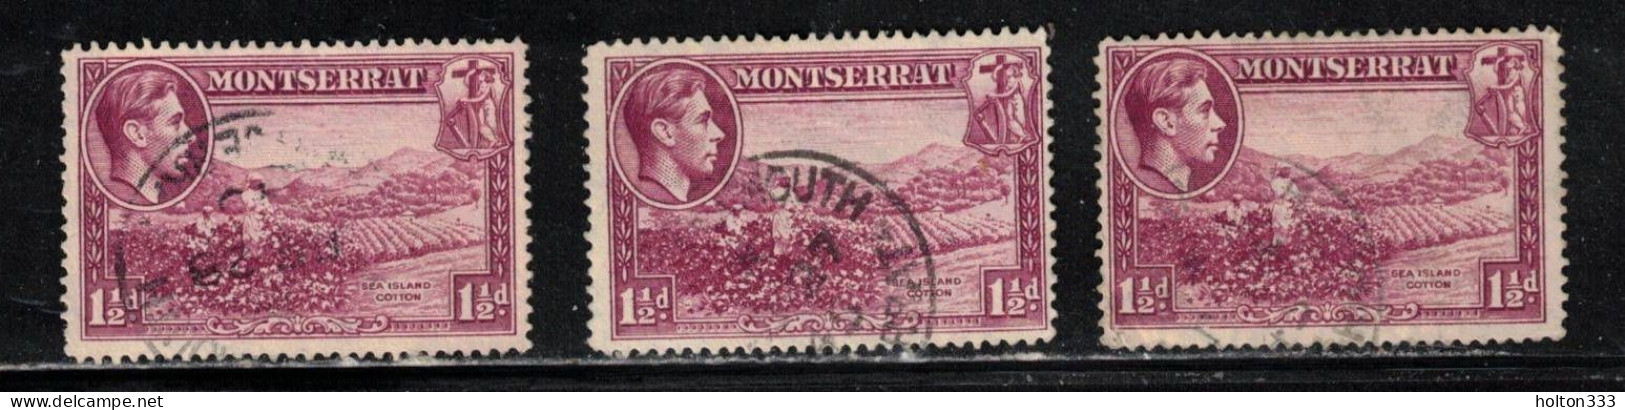 MONTSERRAT Scott # 94 Used X 3 - KGVI & Sea Island Cotton - Montserrat